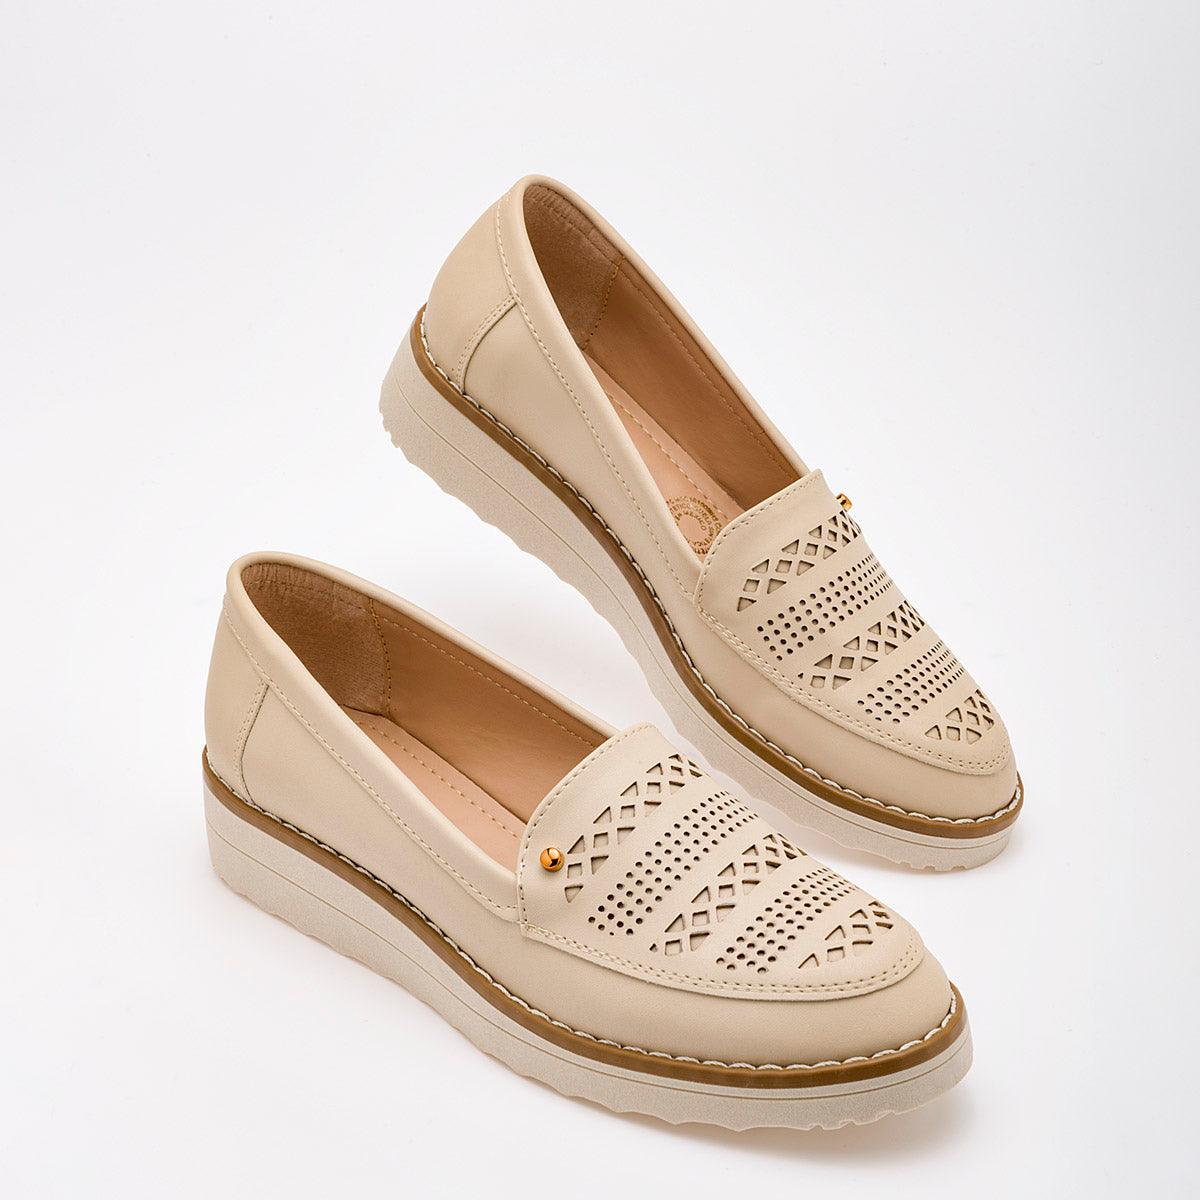 Pakar.com - Mayo: Regalos para mamá | Zapatos para mujer cod-108177